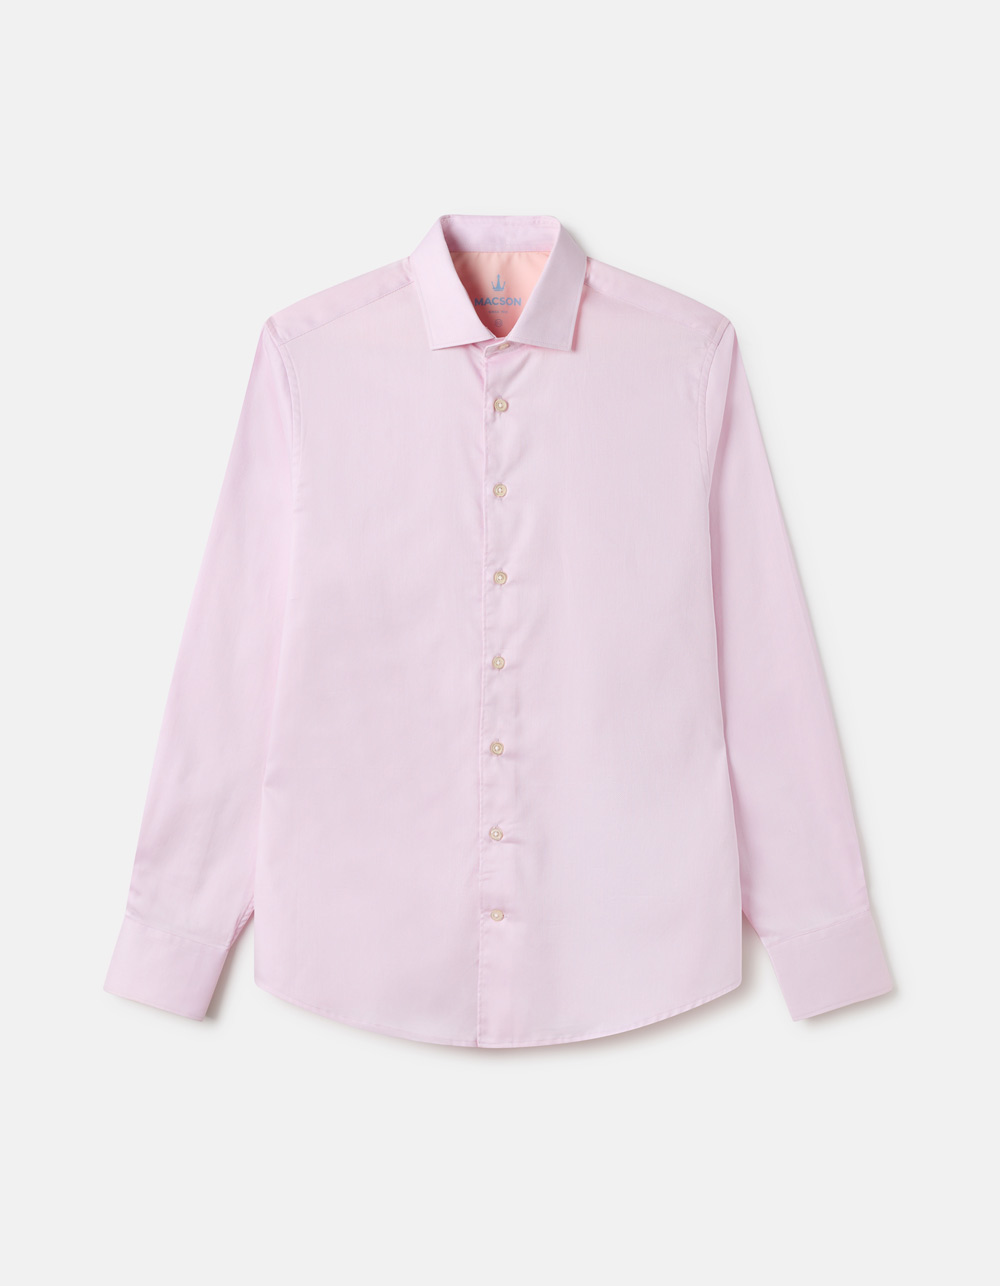 Pink rhombus micro-structured shirt